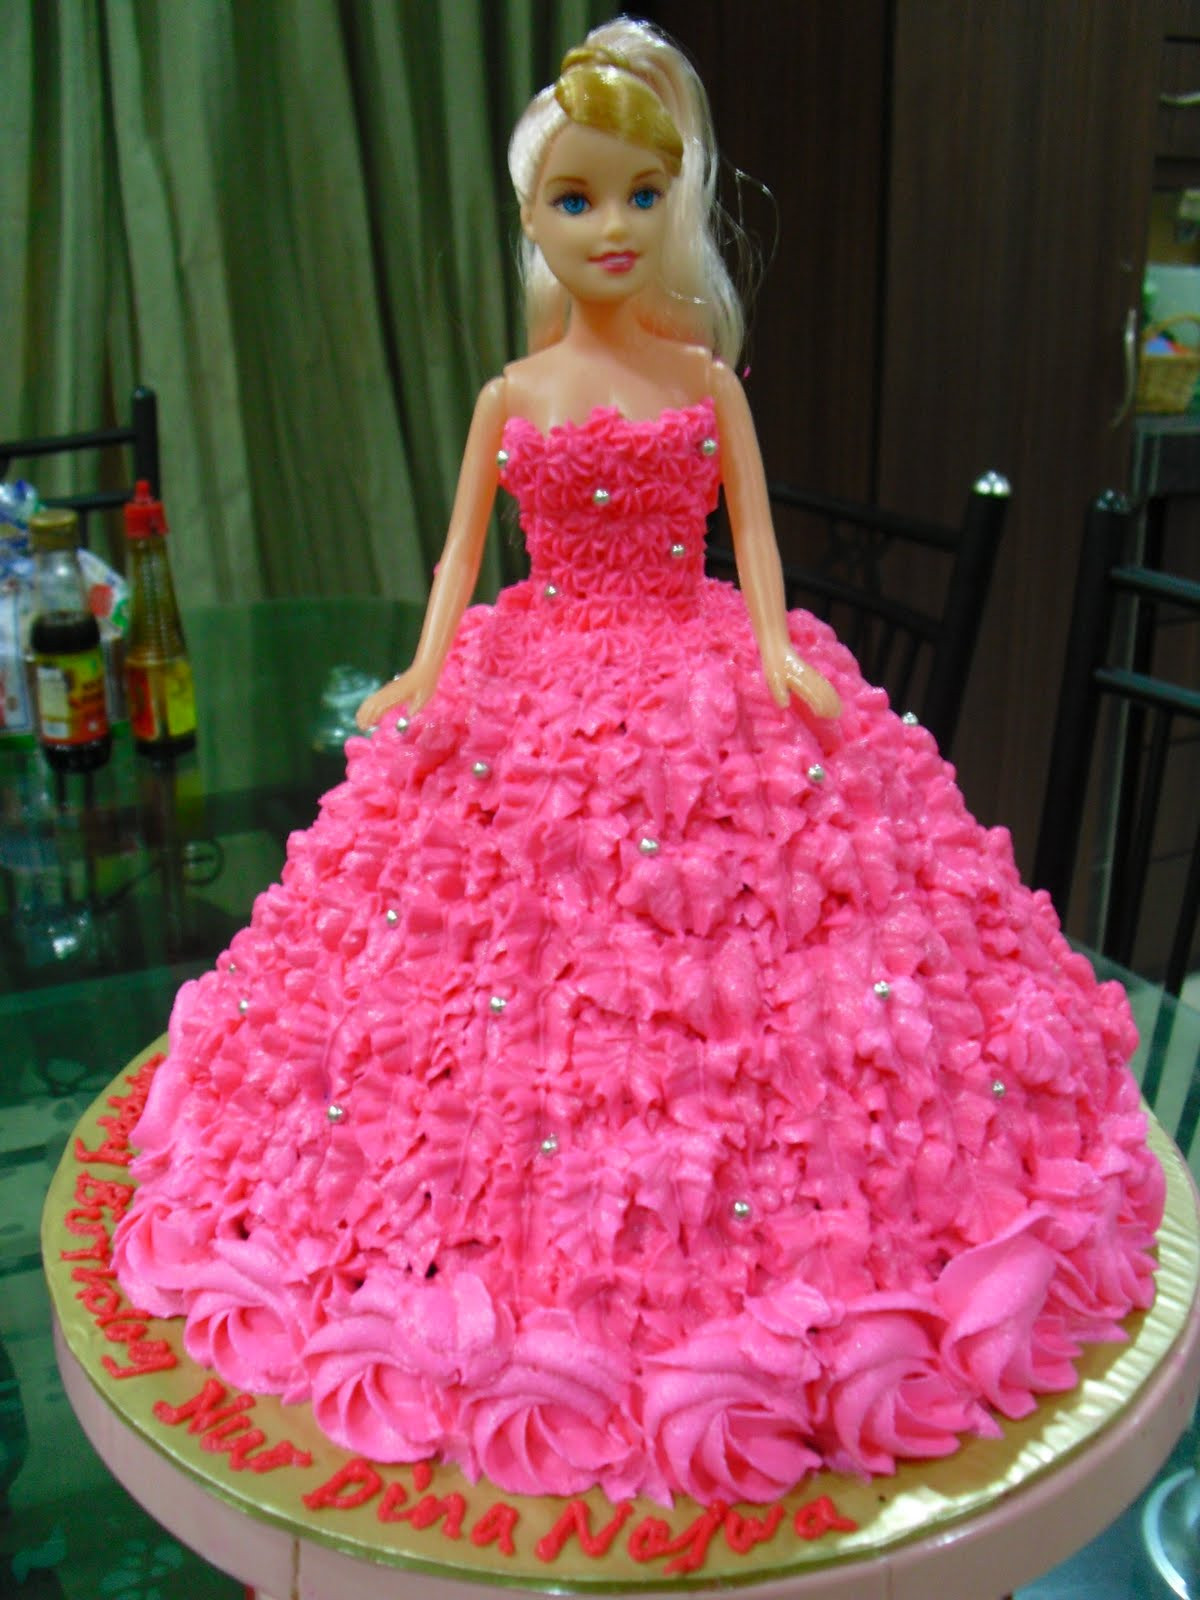 Barbie Birthday Cakes
 Diya s Cupcake Barbie doll for the b day girl